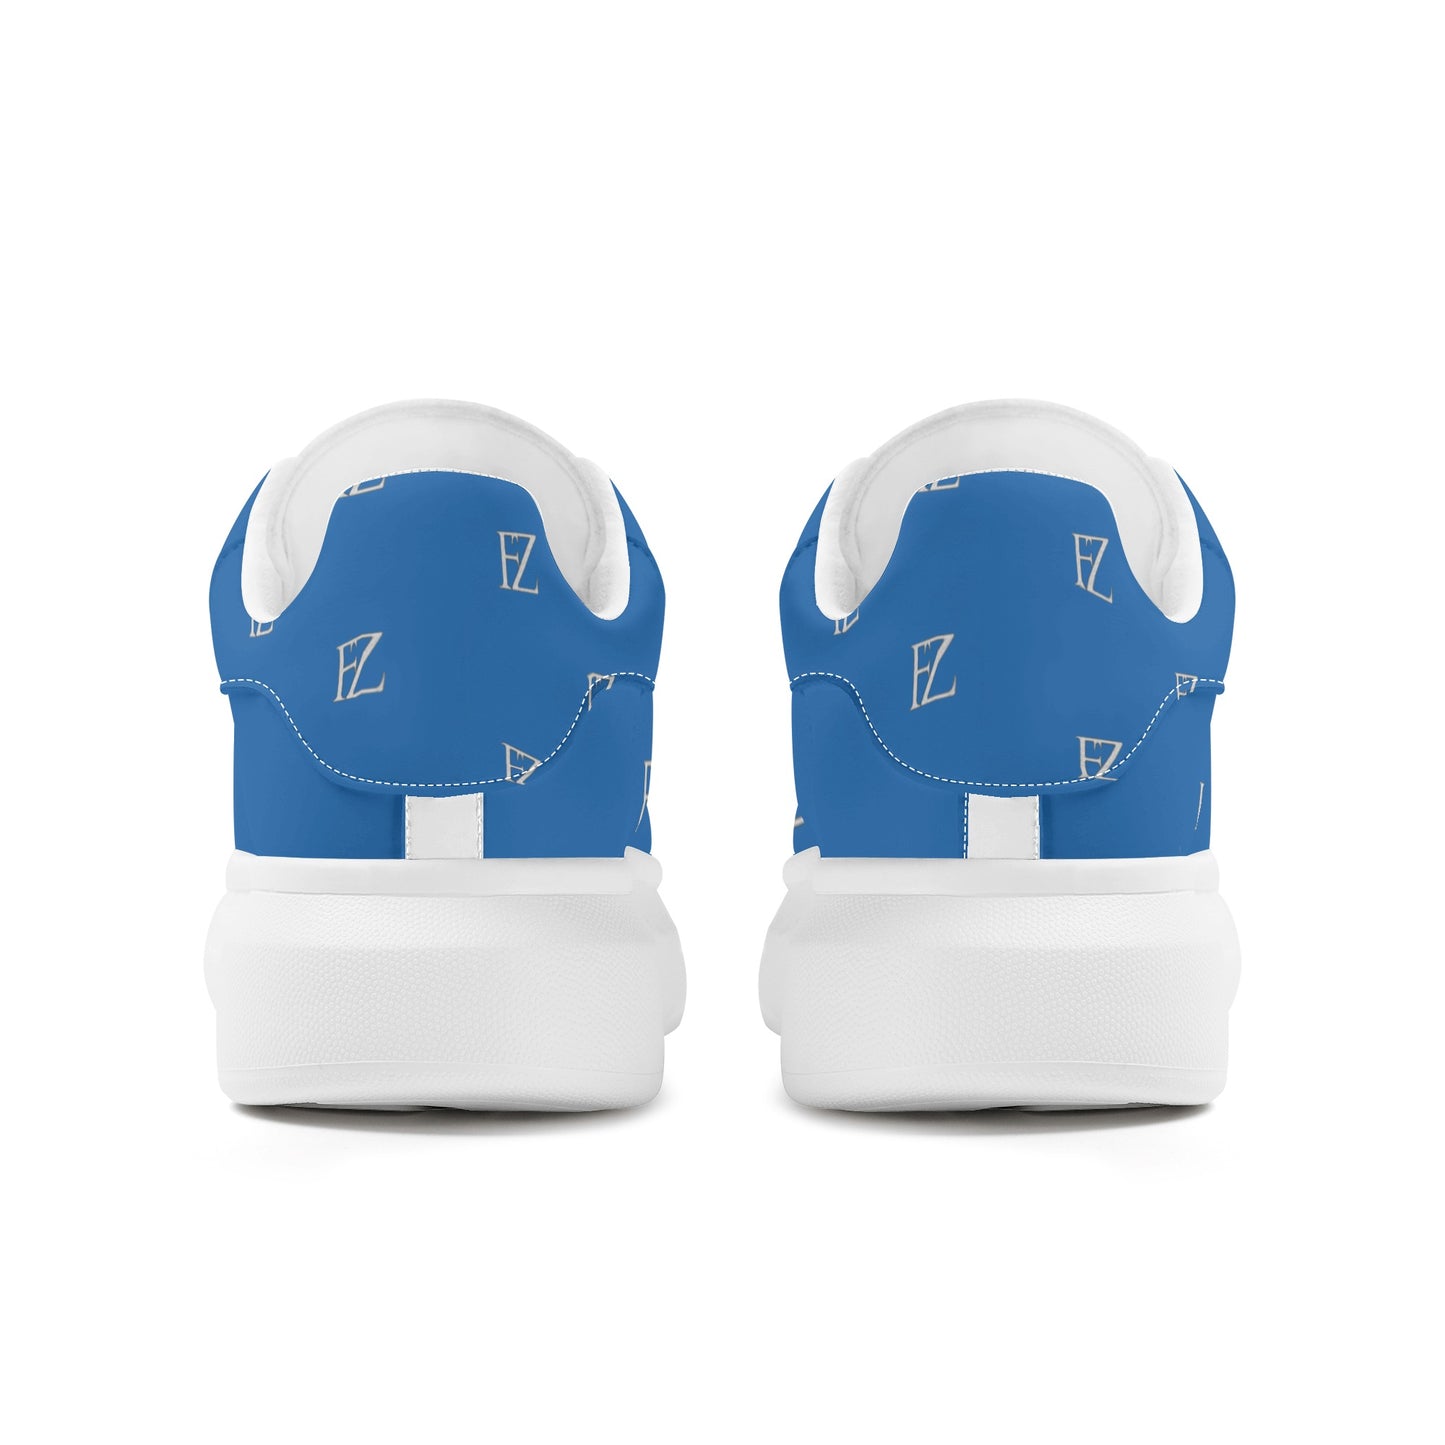 FZ Men's White Tongue Chunky Shoes - FZwear